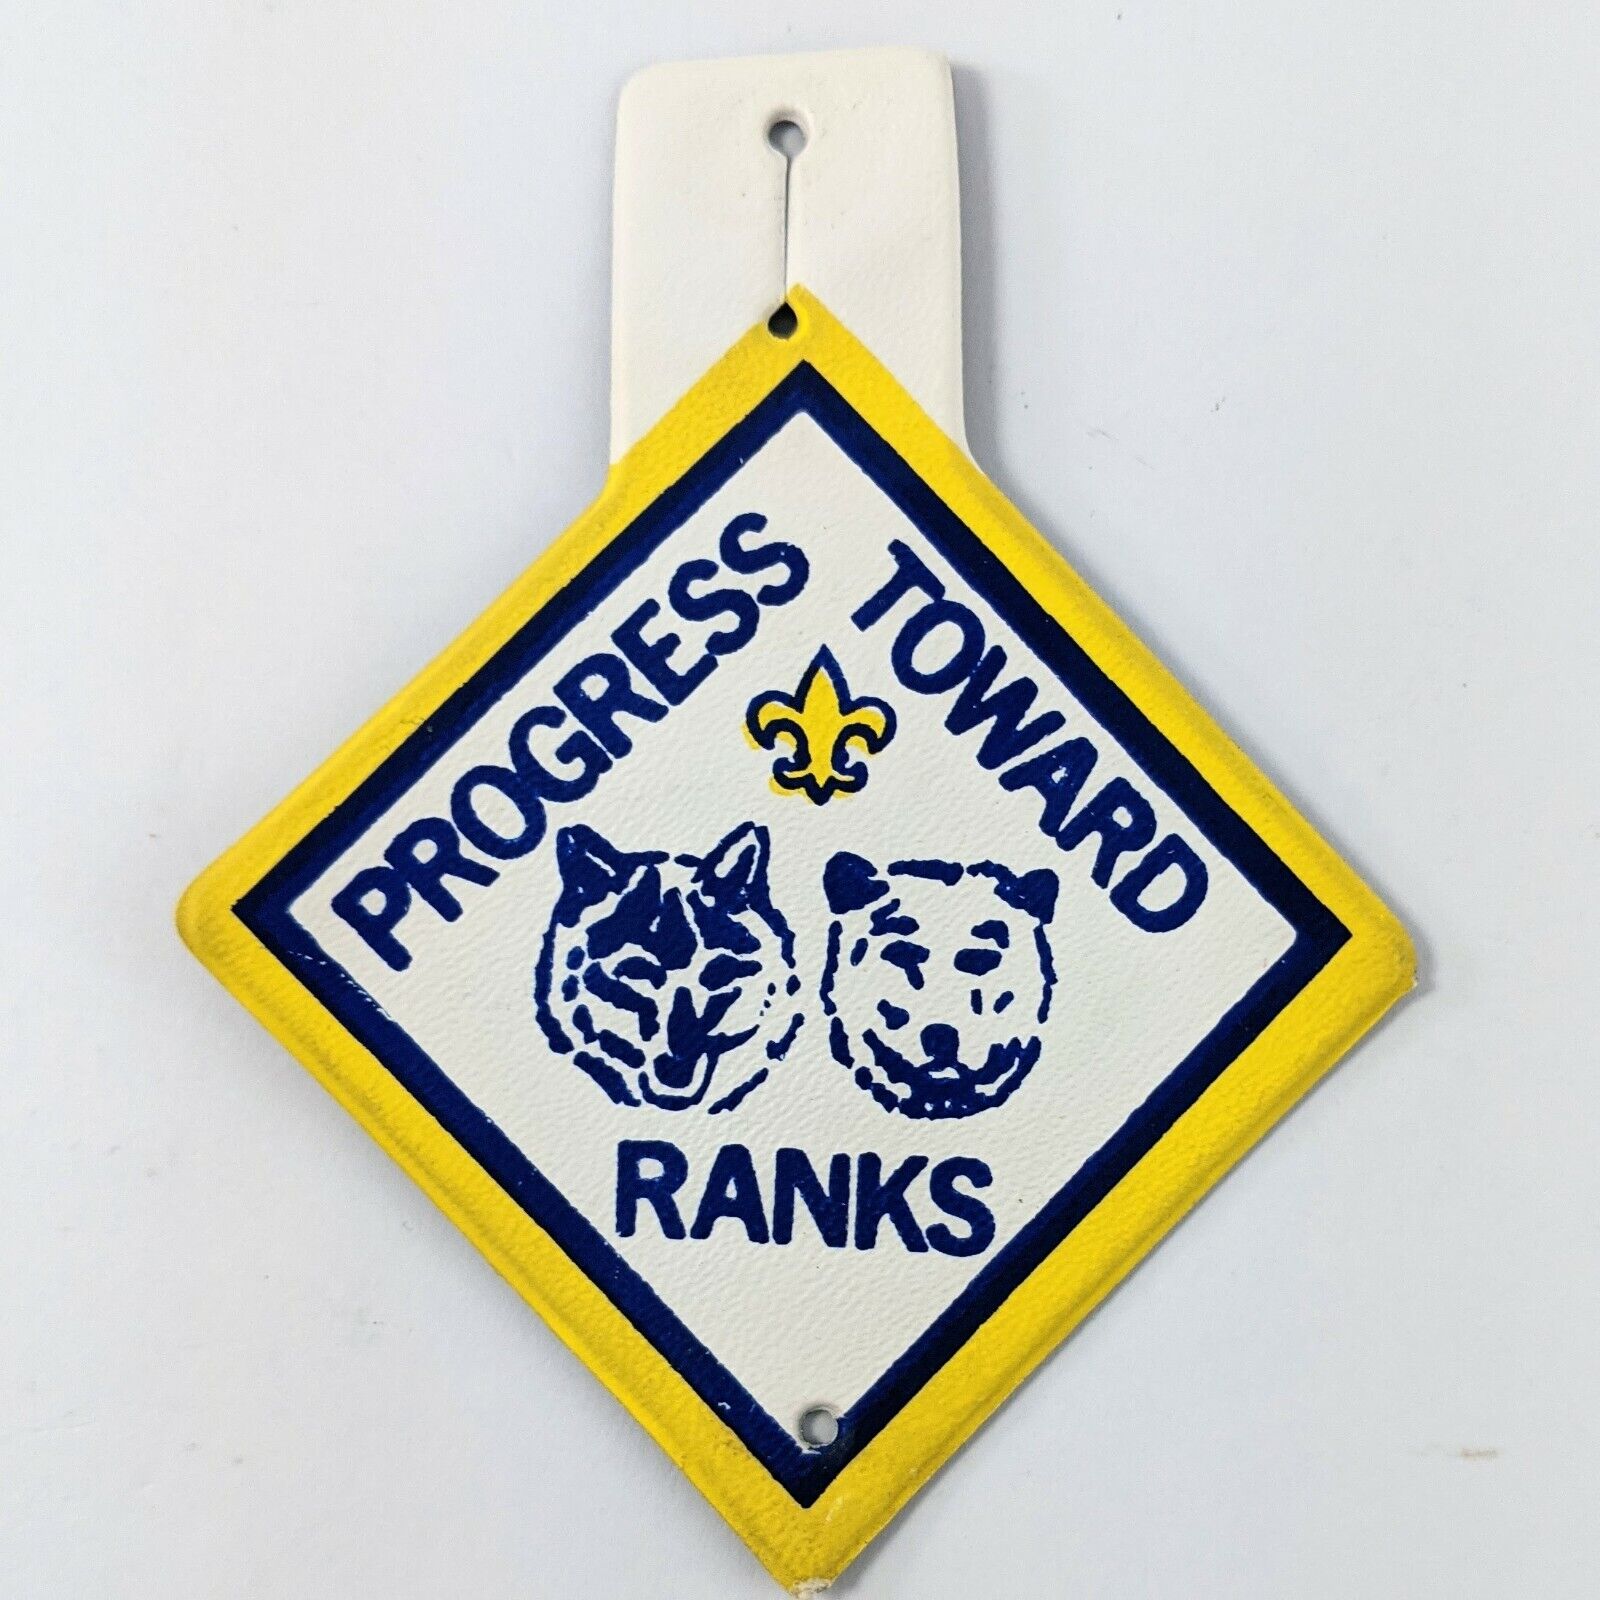 Cub Scouts - Boy Scouts of America - Progress Towards Ranks pocket fob tag